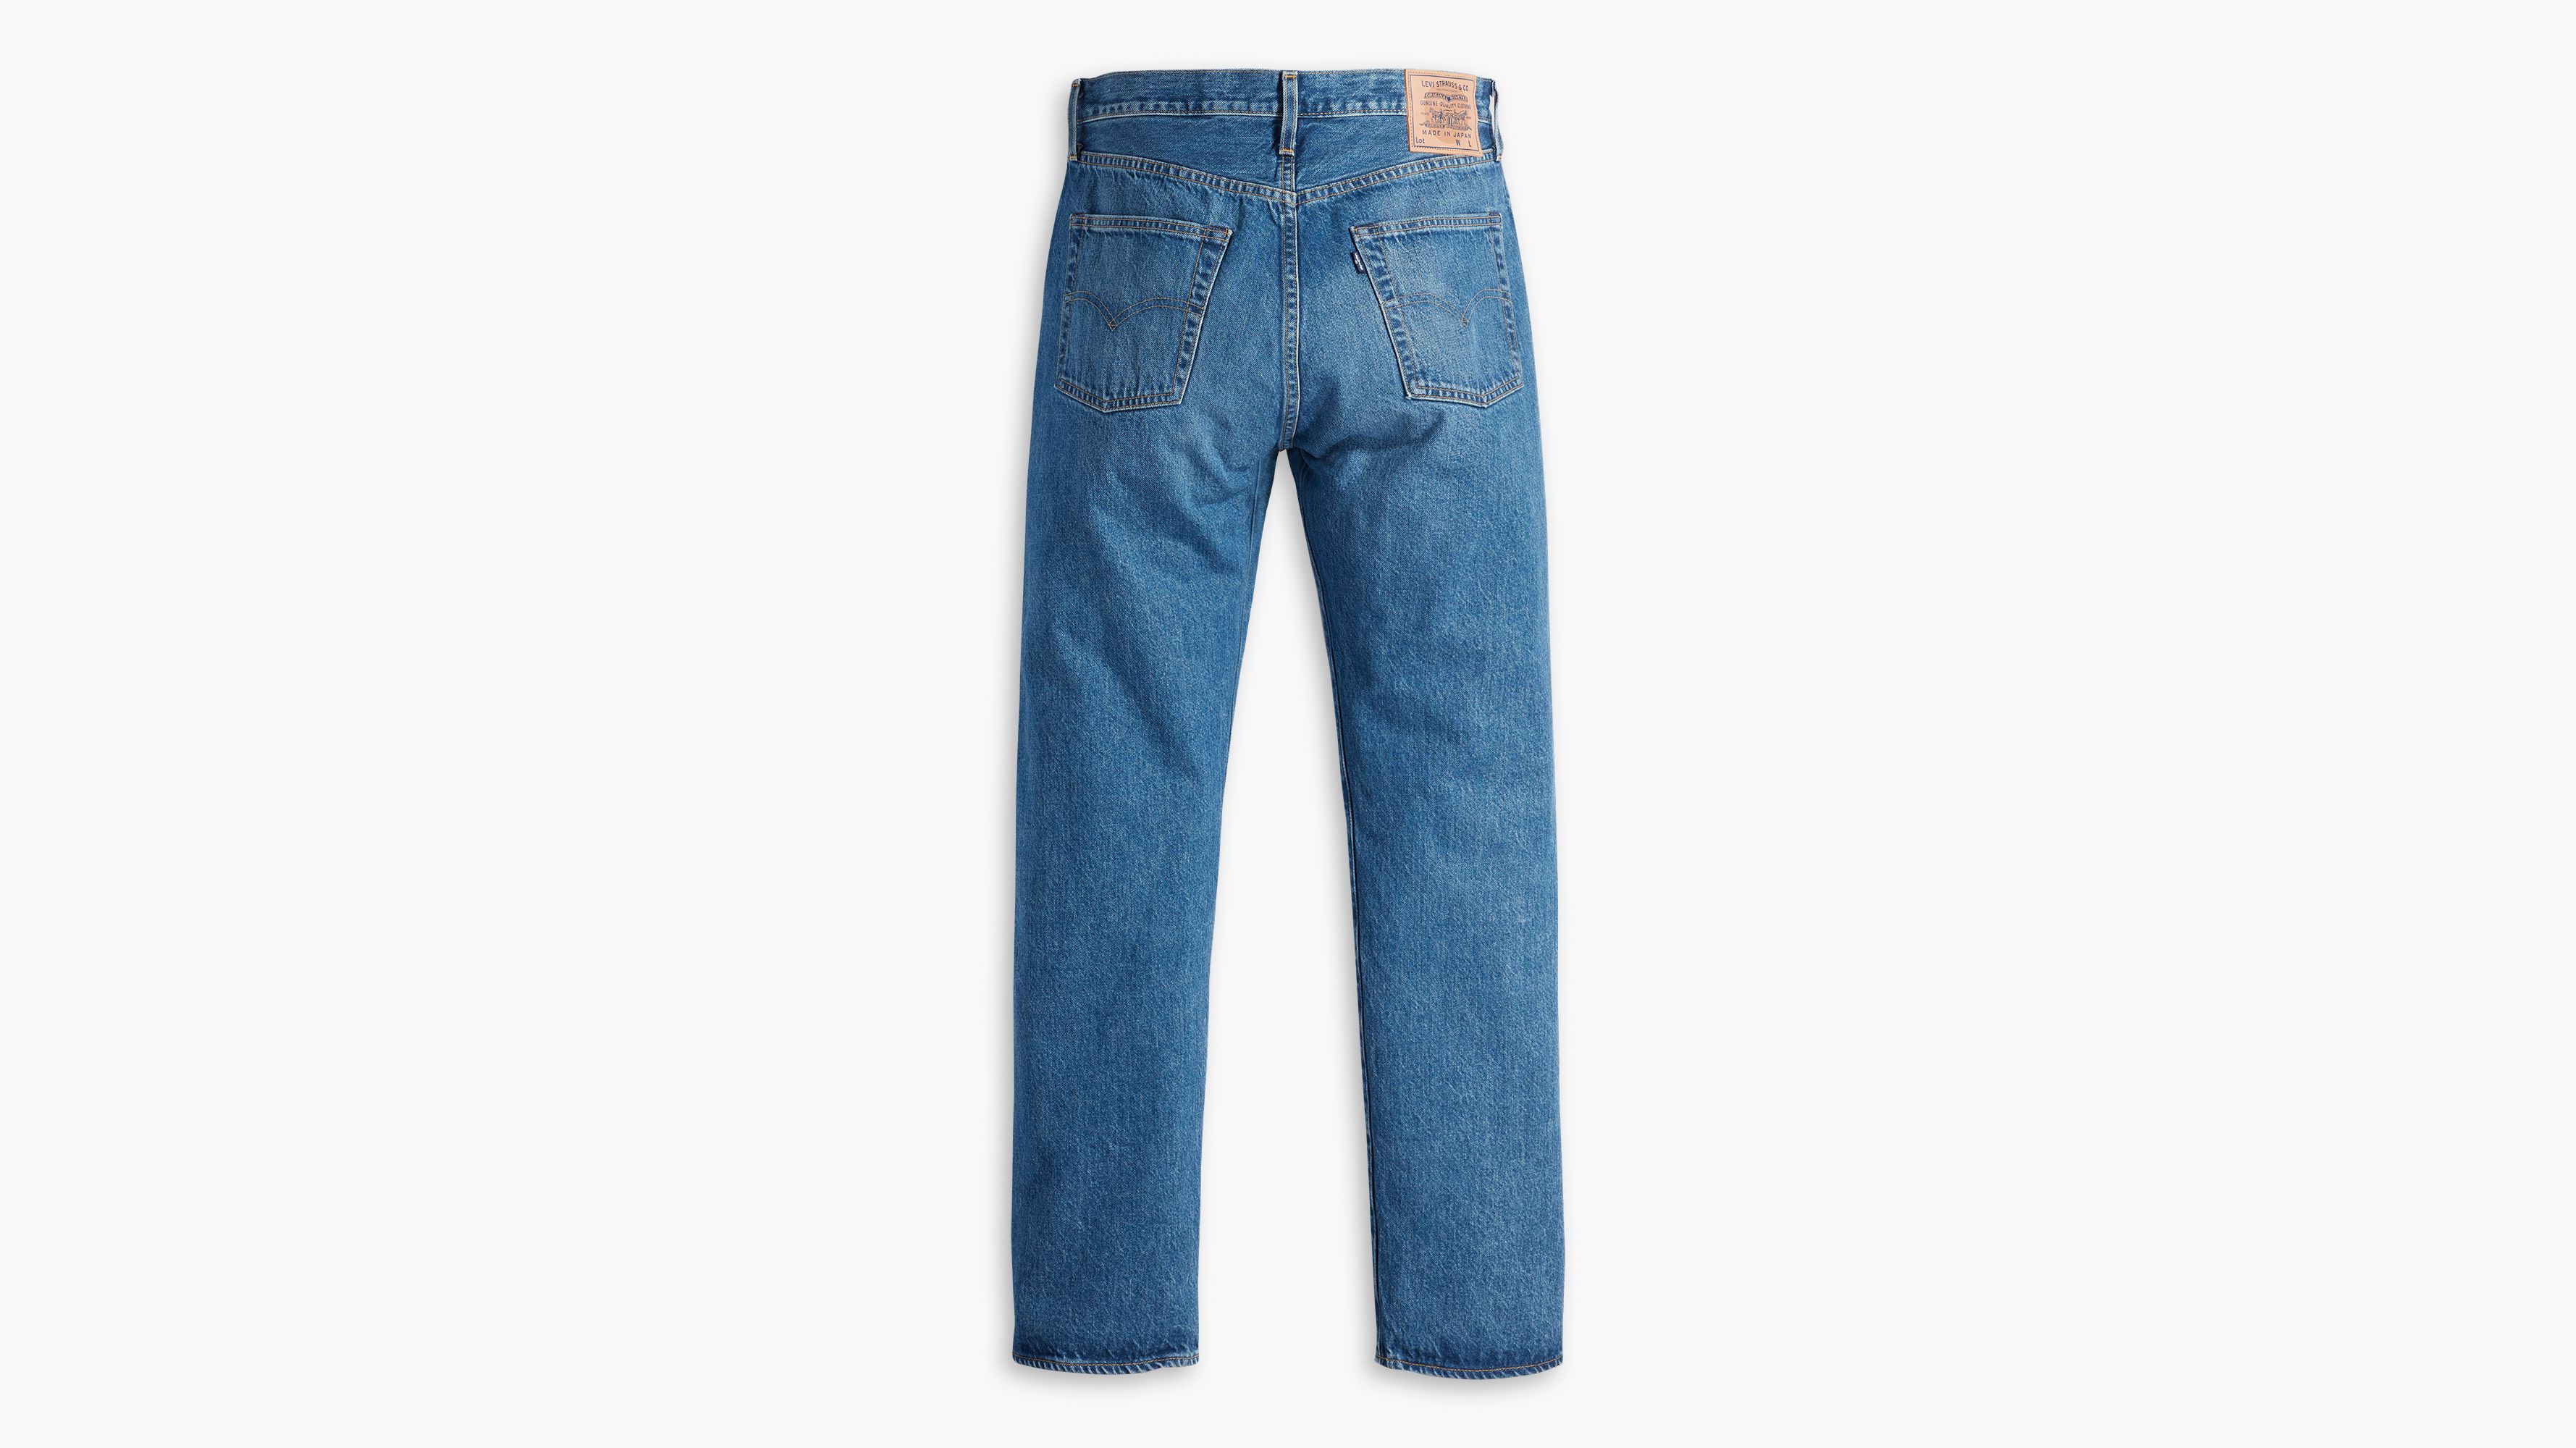 Made in Japan 1980's 501® Original Fit Men's Jeans